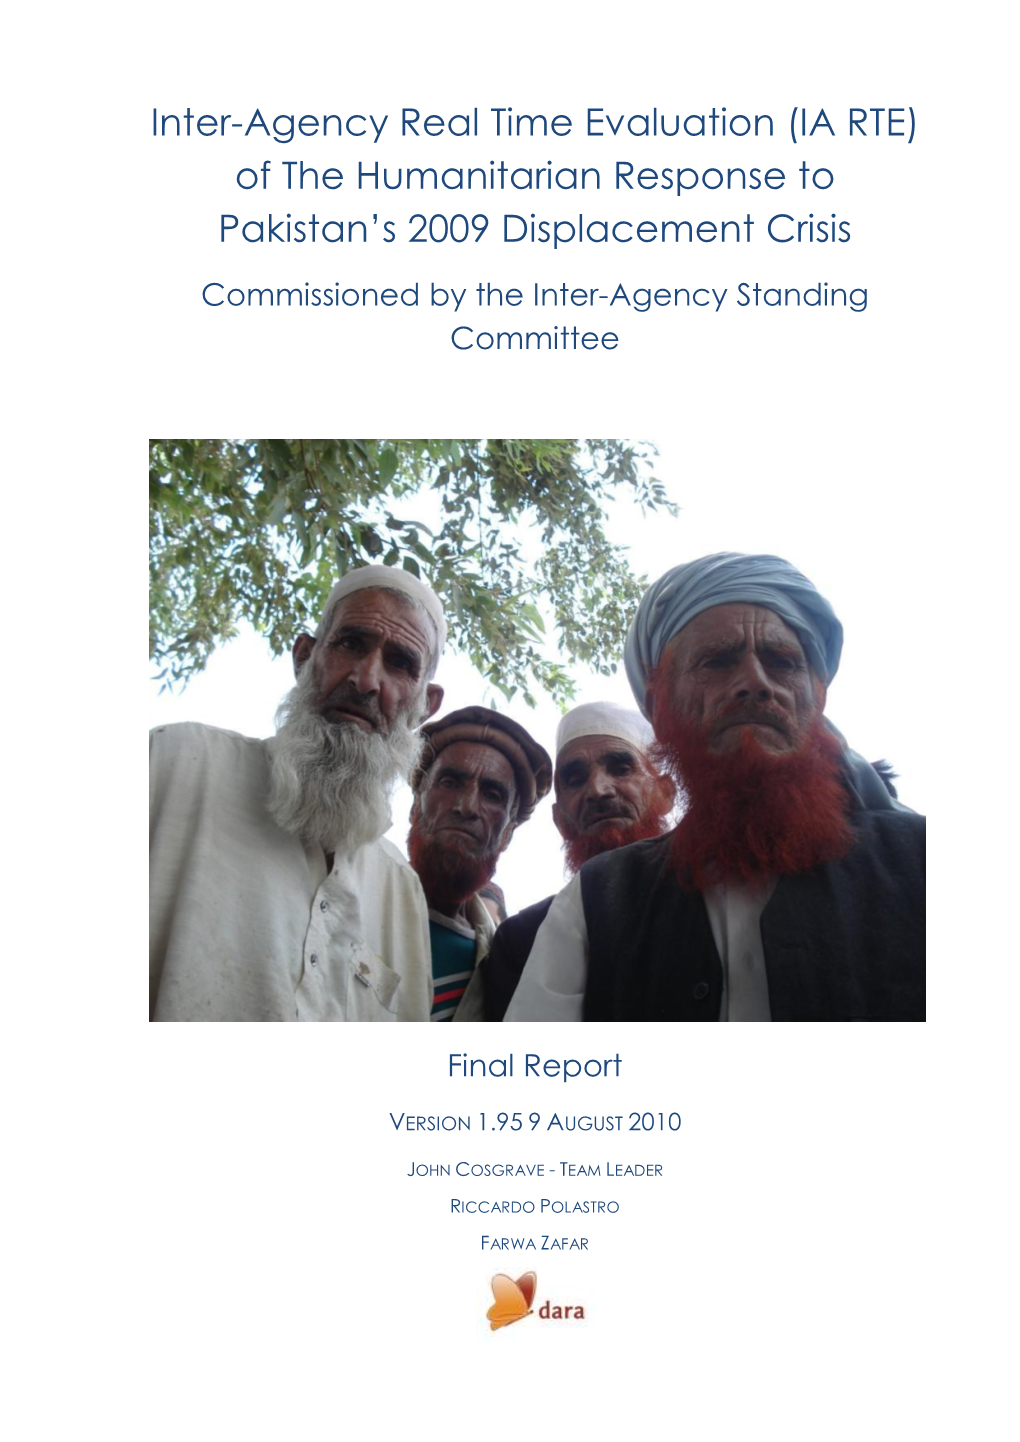 Of the Humanitarian Response to Pakistan's 2009